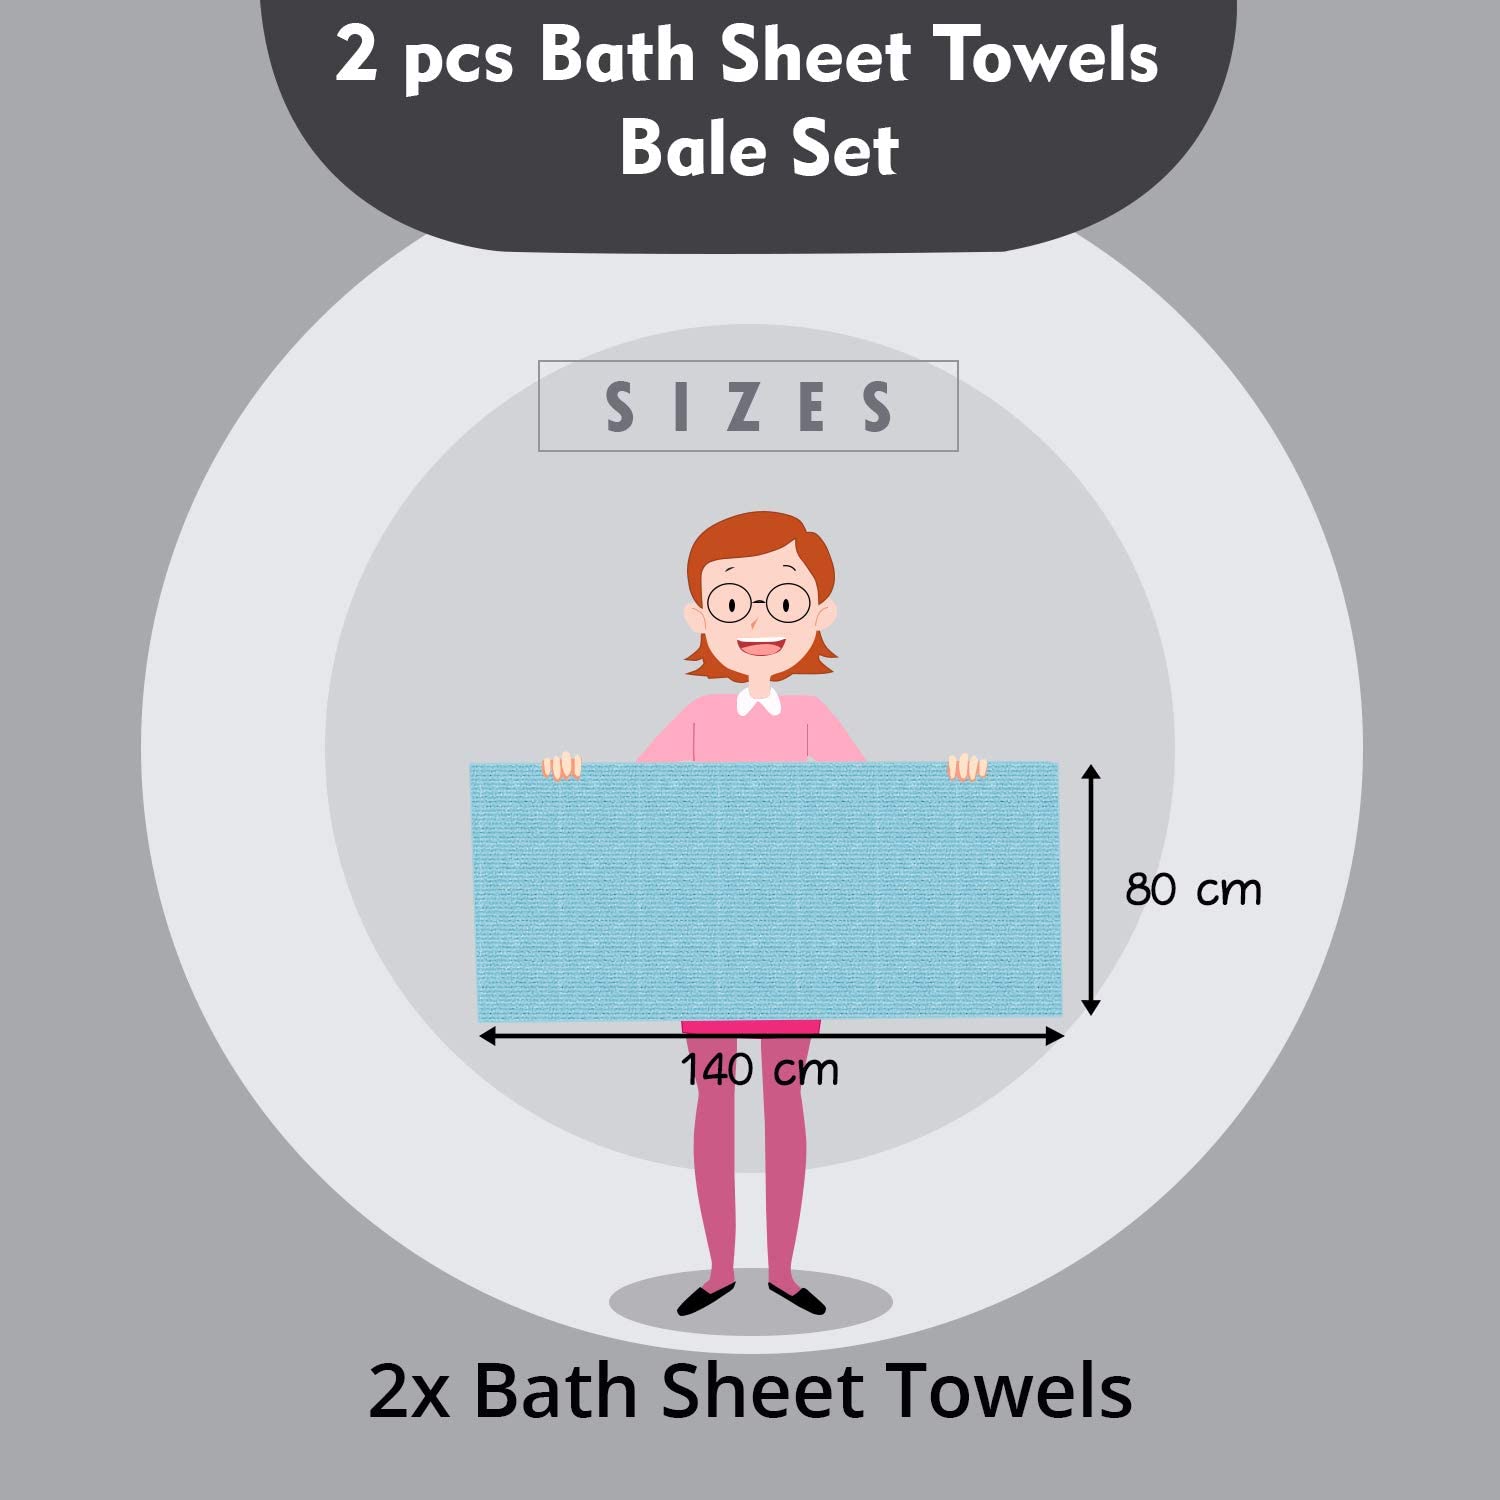 2 Pcs 100 % Cotton Premium Bath Sheet Towel Bale Set Navy Dark Plain